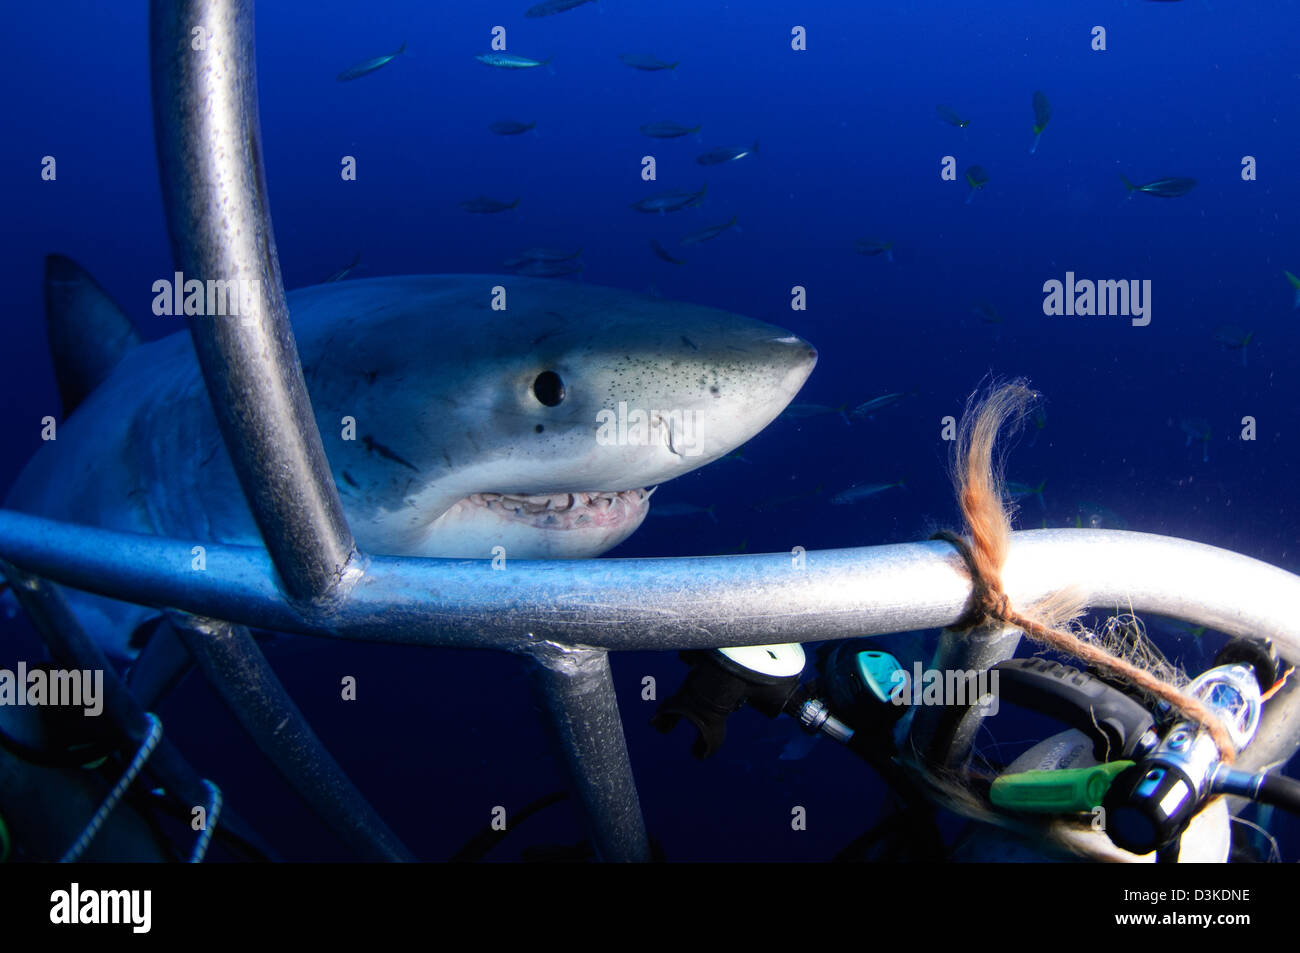 Hembra Gran Tiburón Blanco, Isla Guadalupe, México. Foto de stock